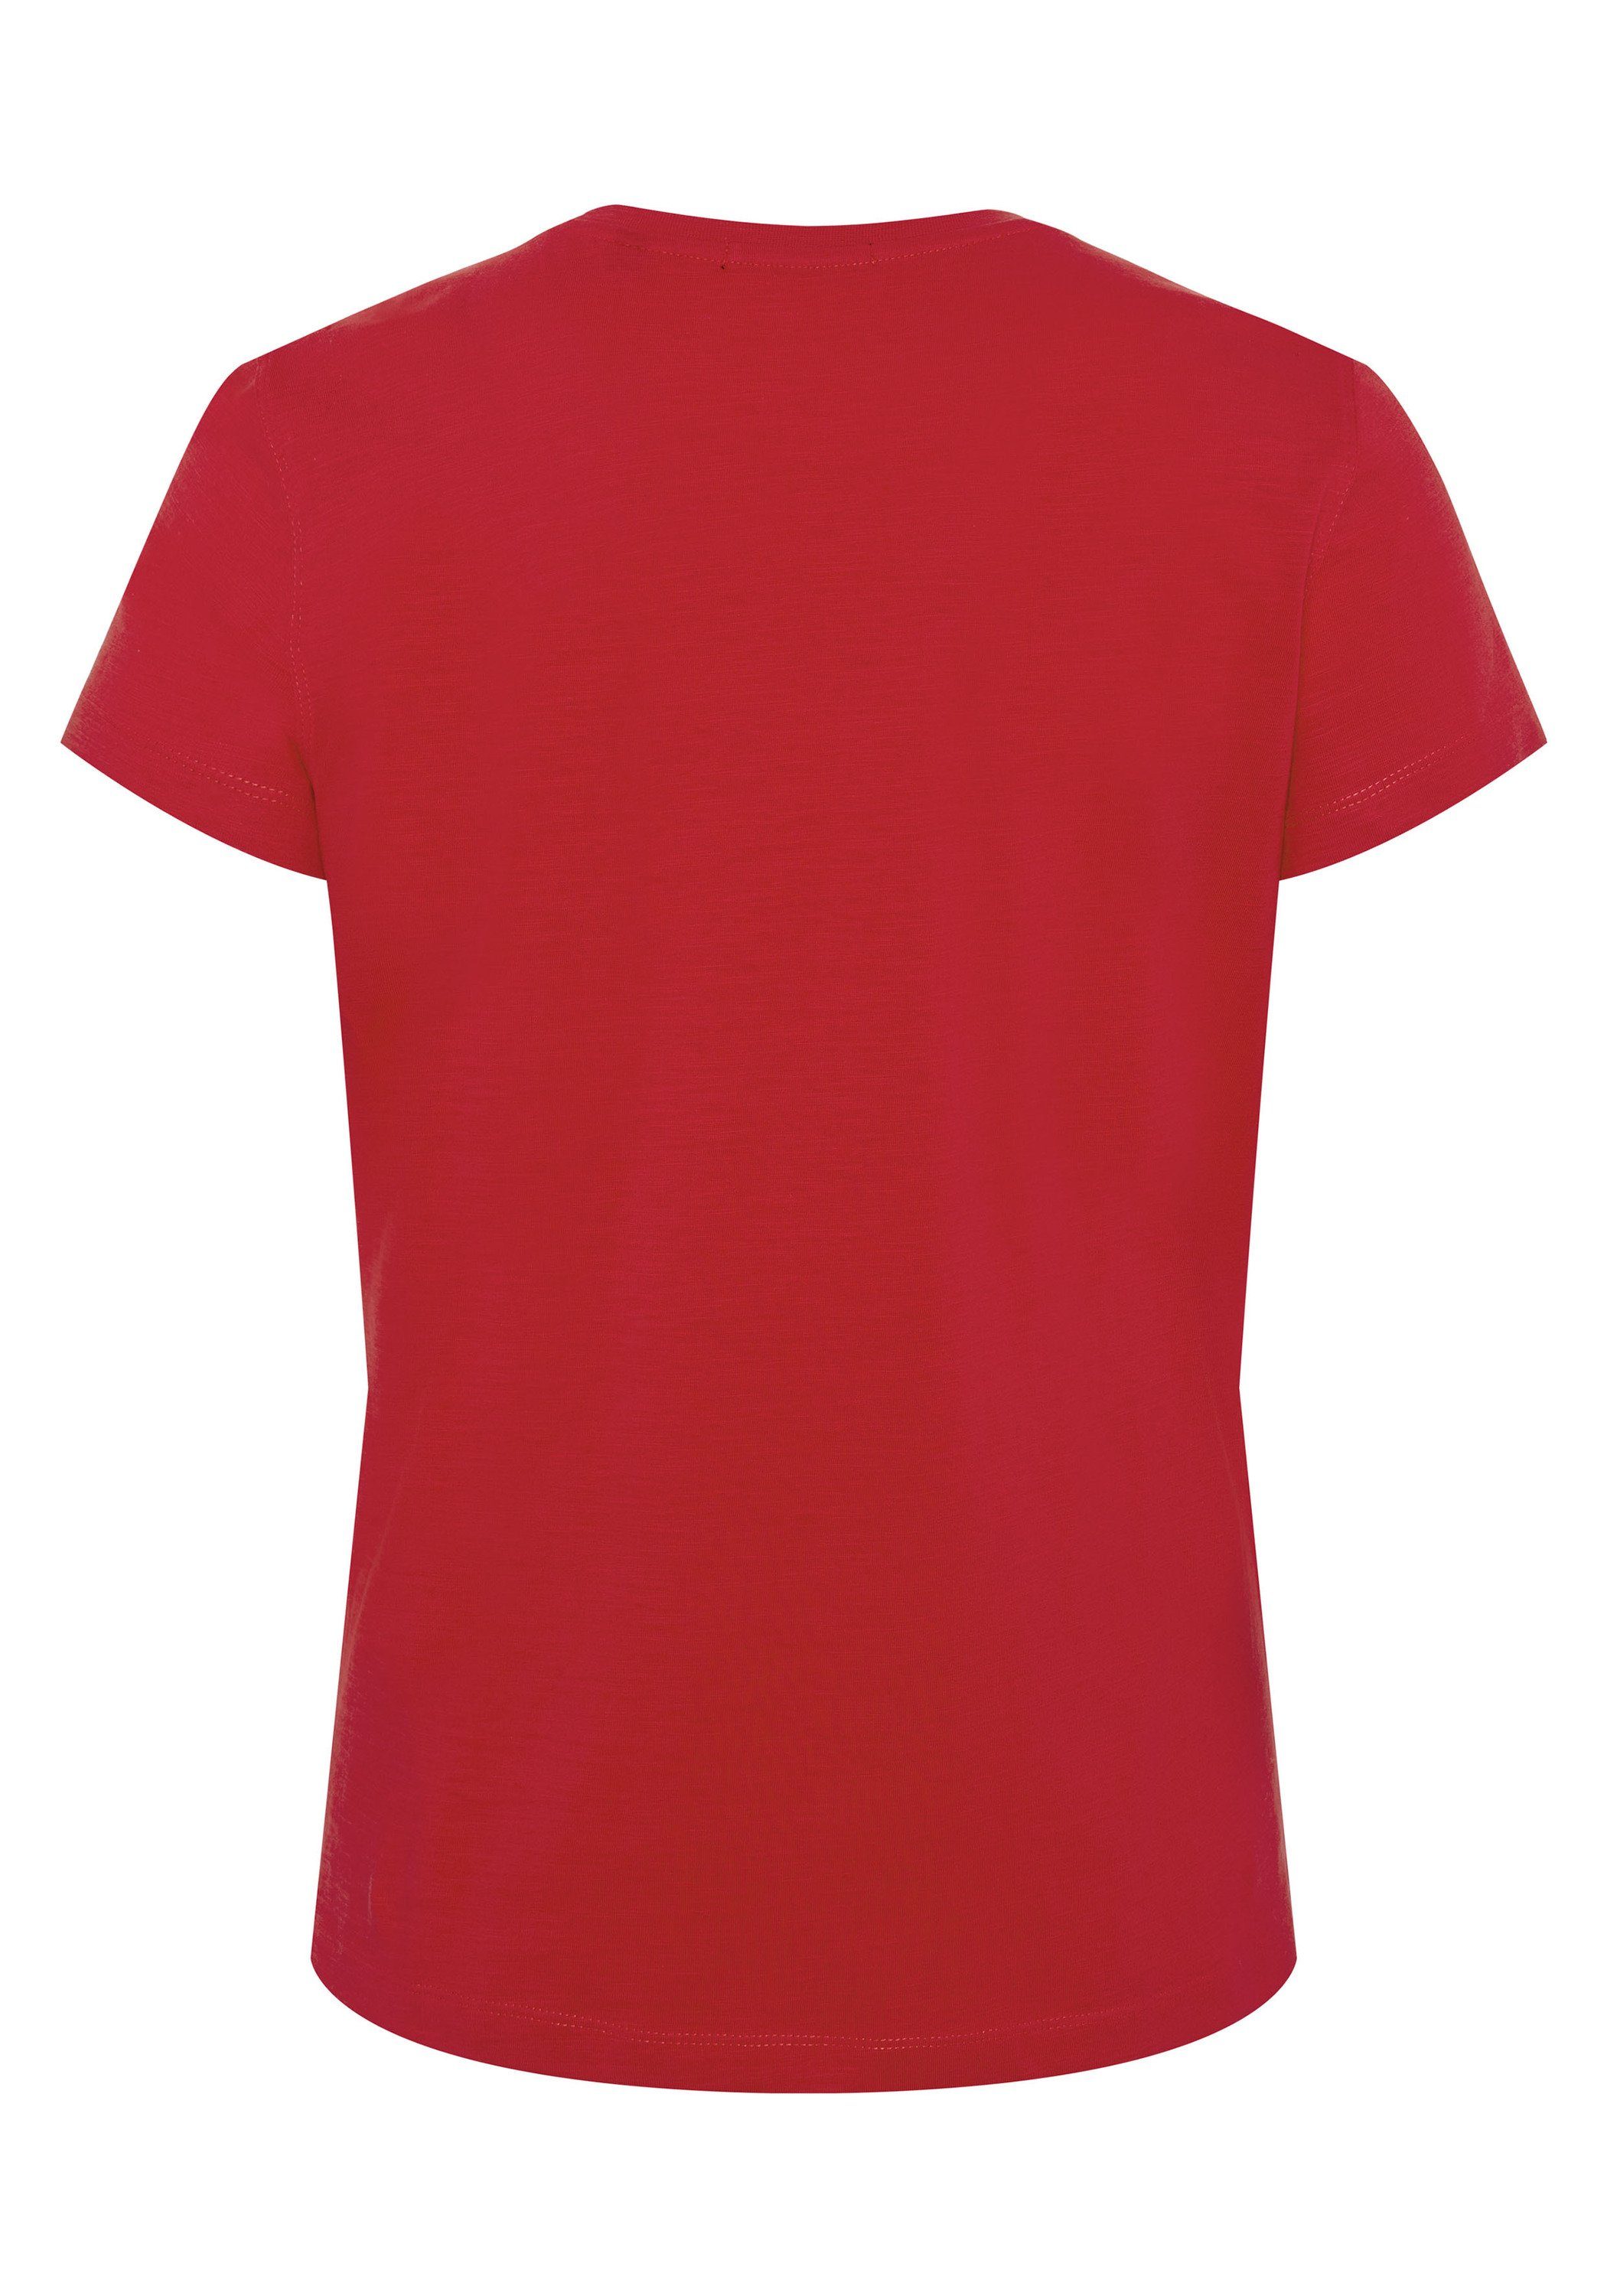 Chiemsee Print-Shirt T-Shirt Toreador mit 1 Logo Farbverlauf-Optik in